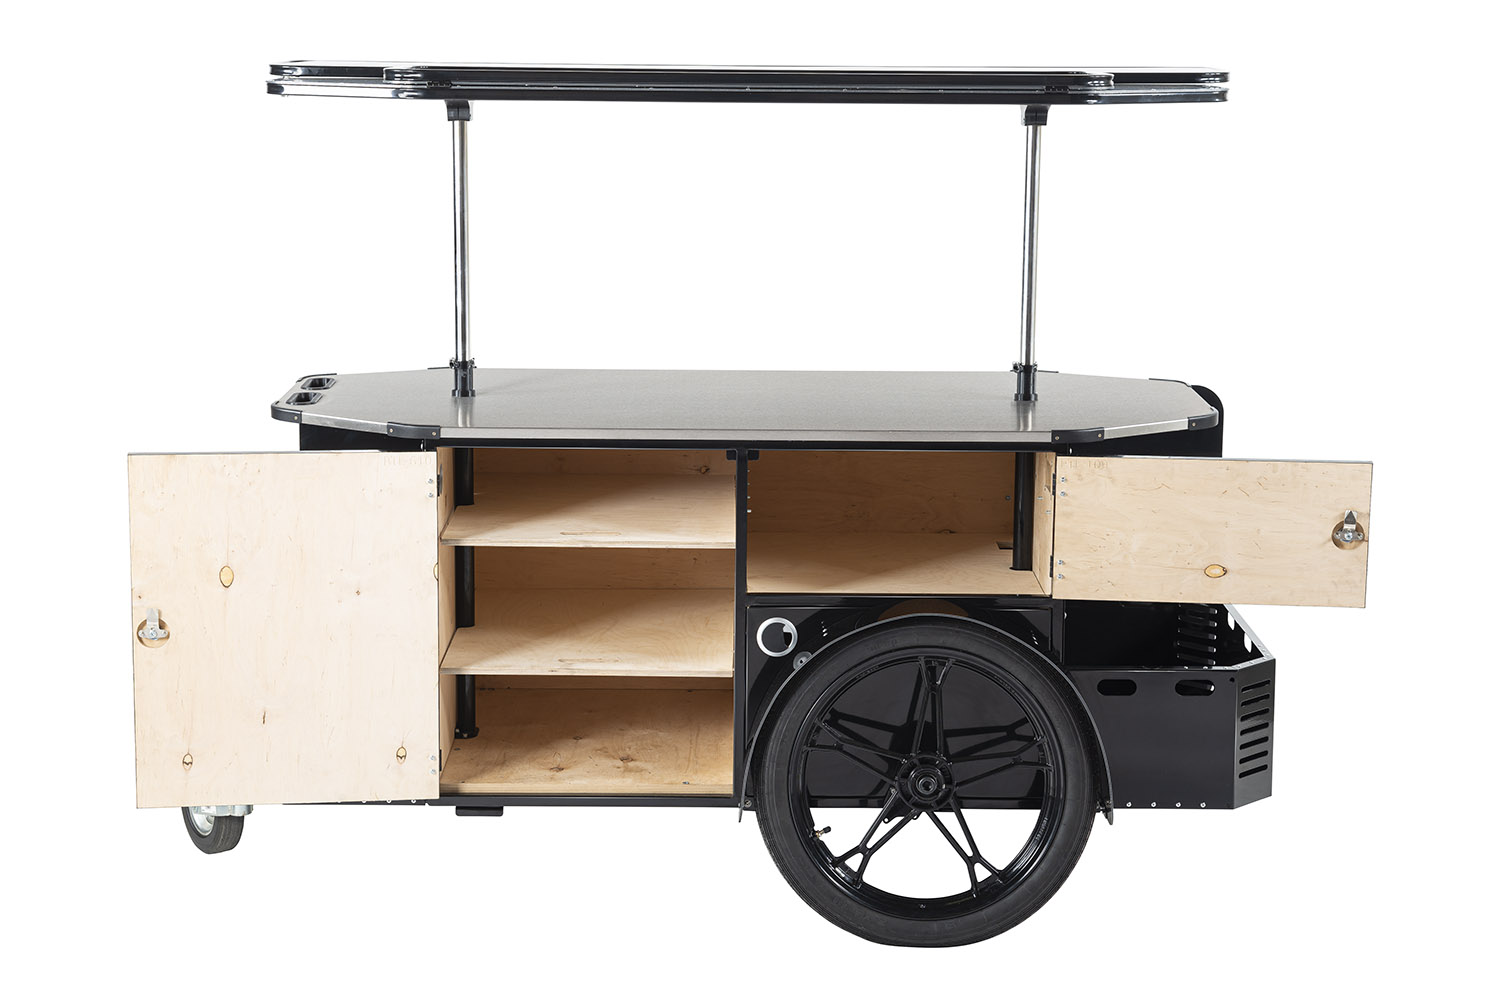 Street vendor cart with interior storage by Bizz On Wheels